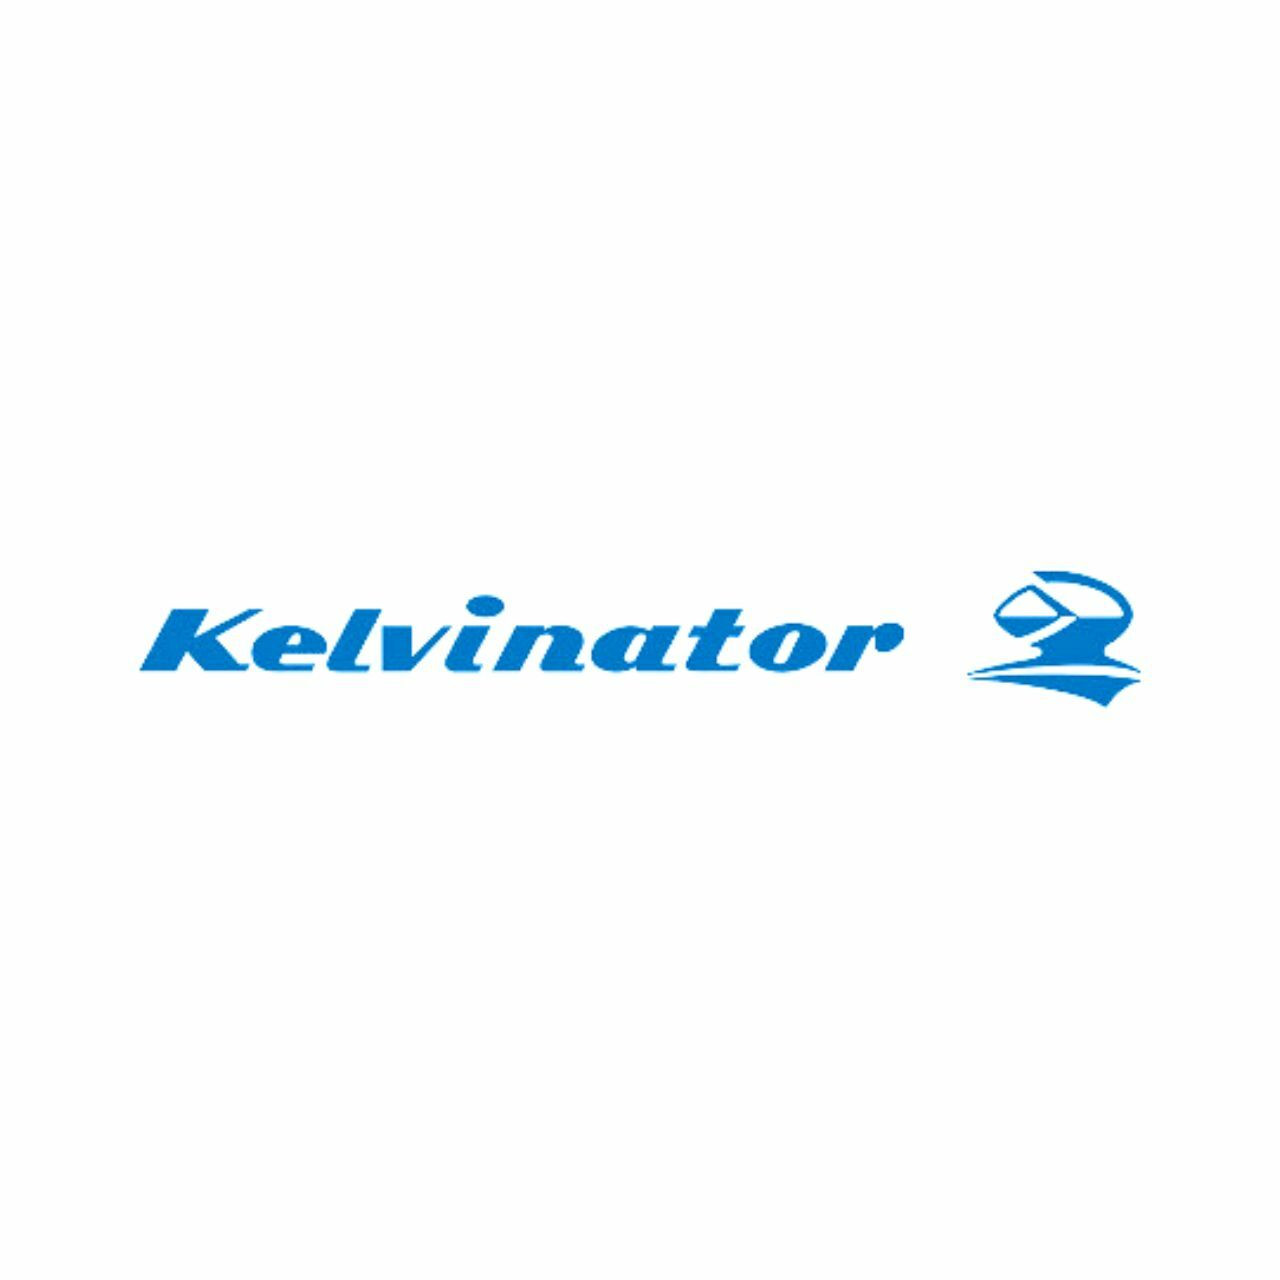 Kelvinator